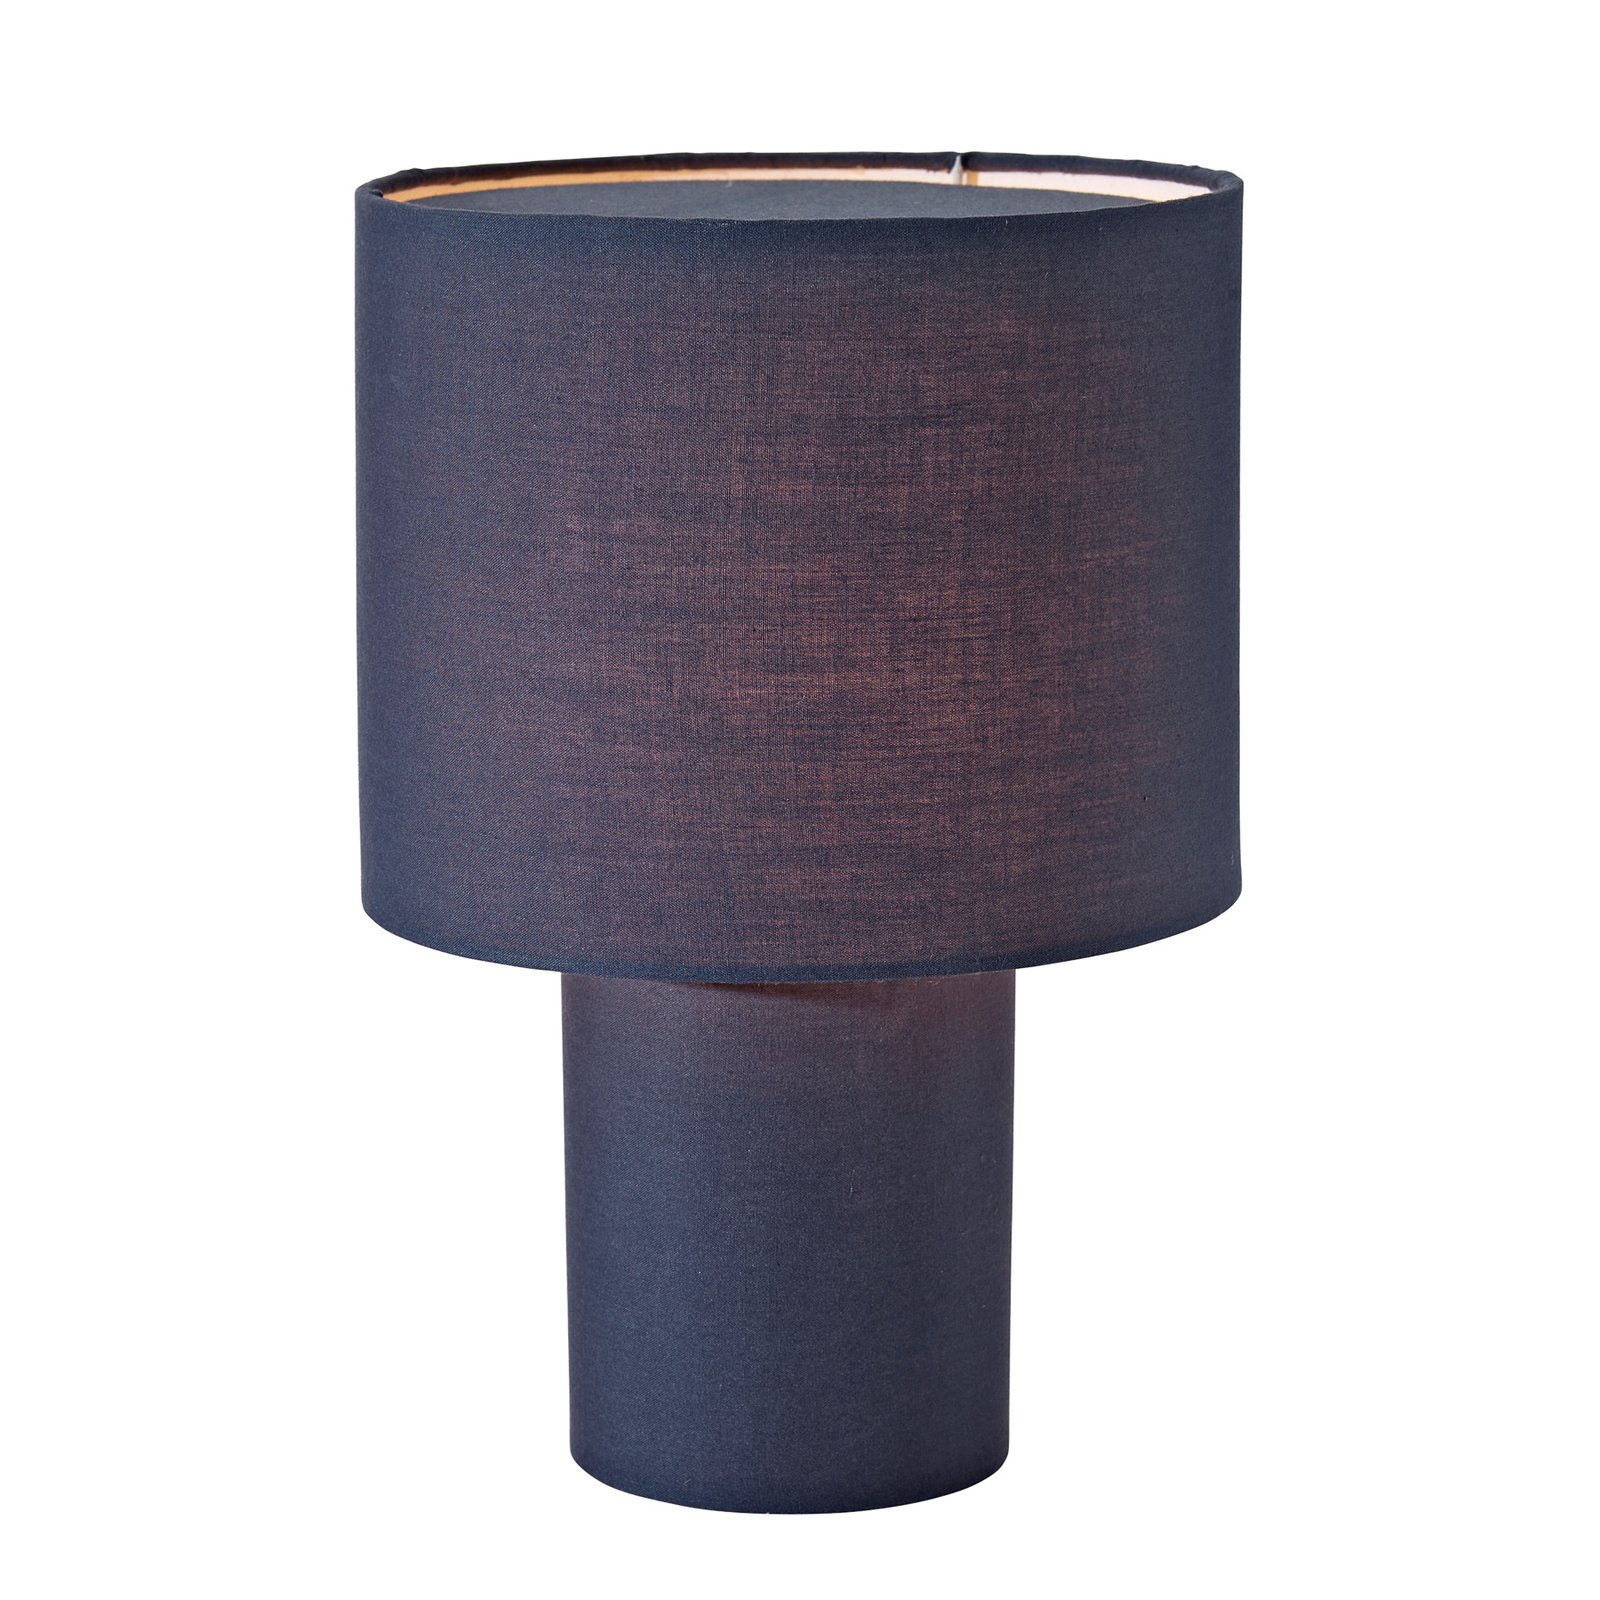 PR Home Leah table lamp cotton height 28cm blue